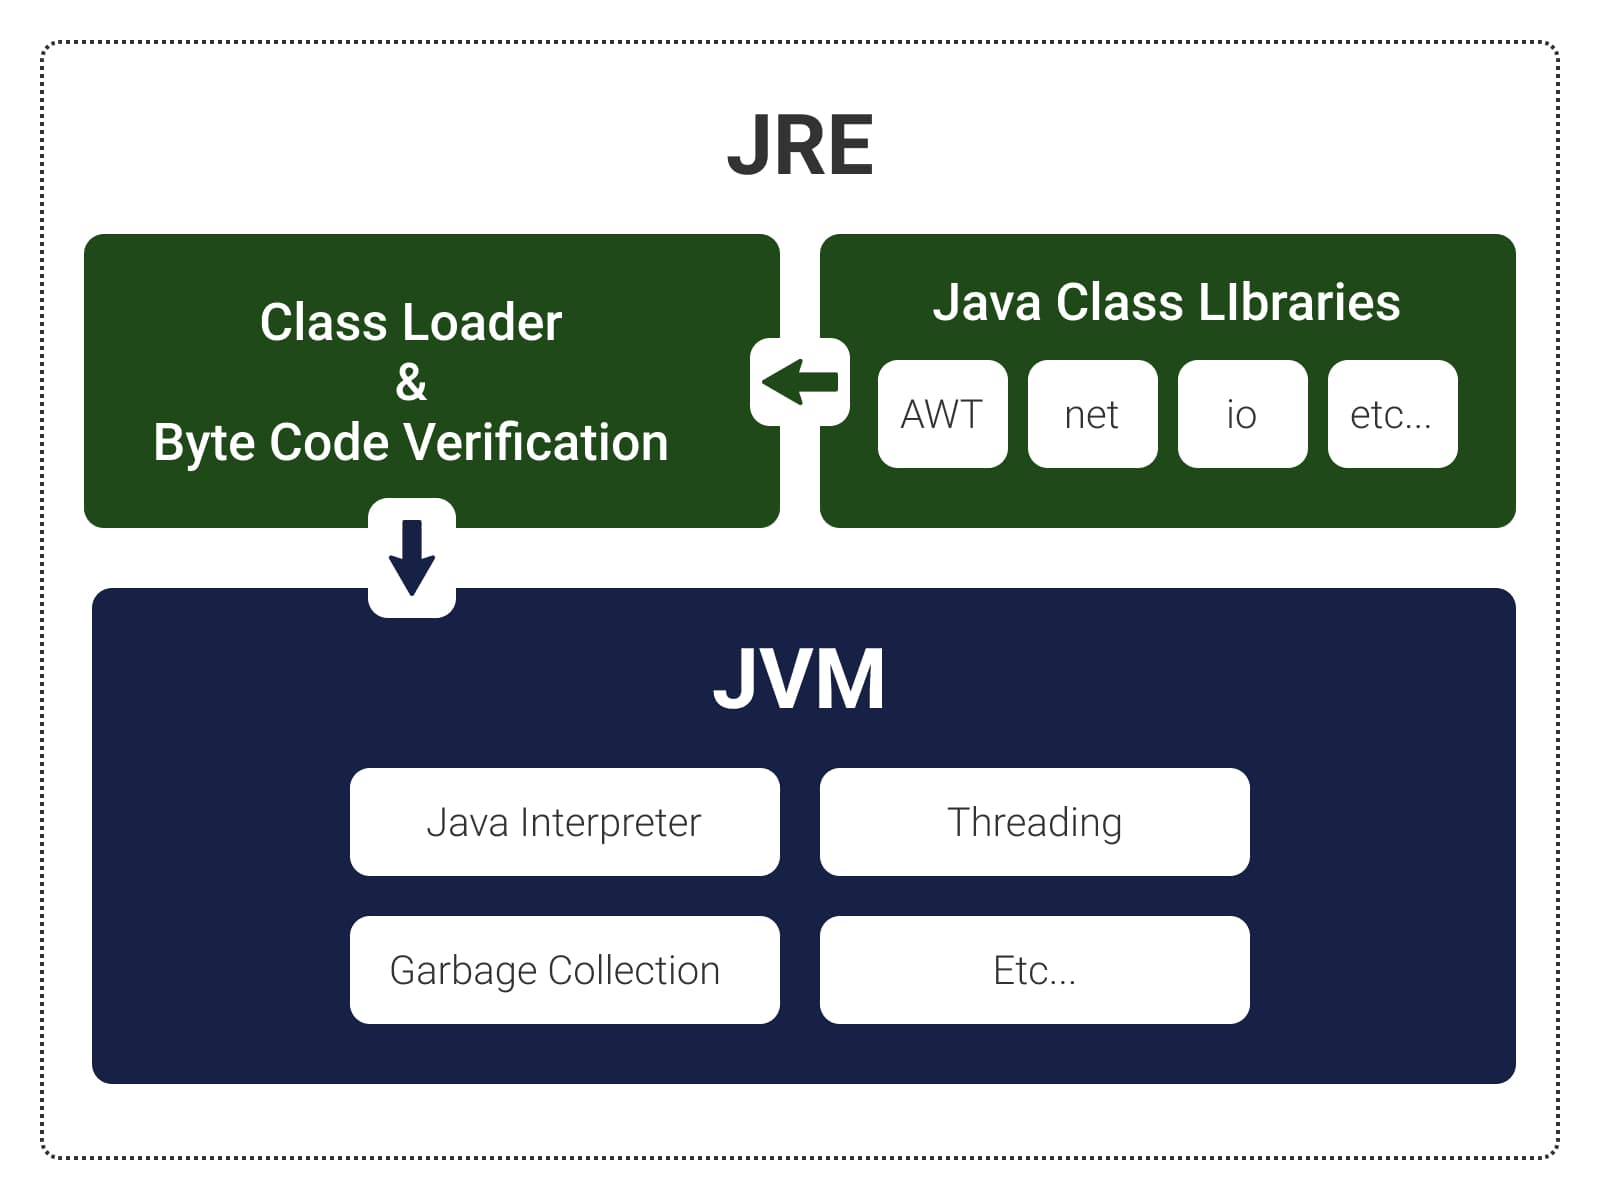 Окружения java. Среда выполнения java. JDK JRE JVM. Java se runtime environment. Java Virtual Machine.